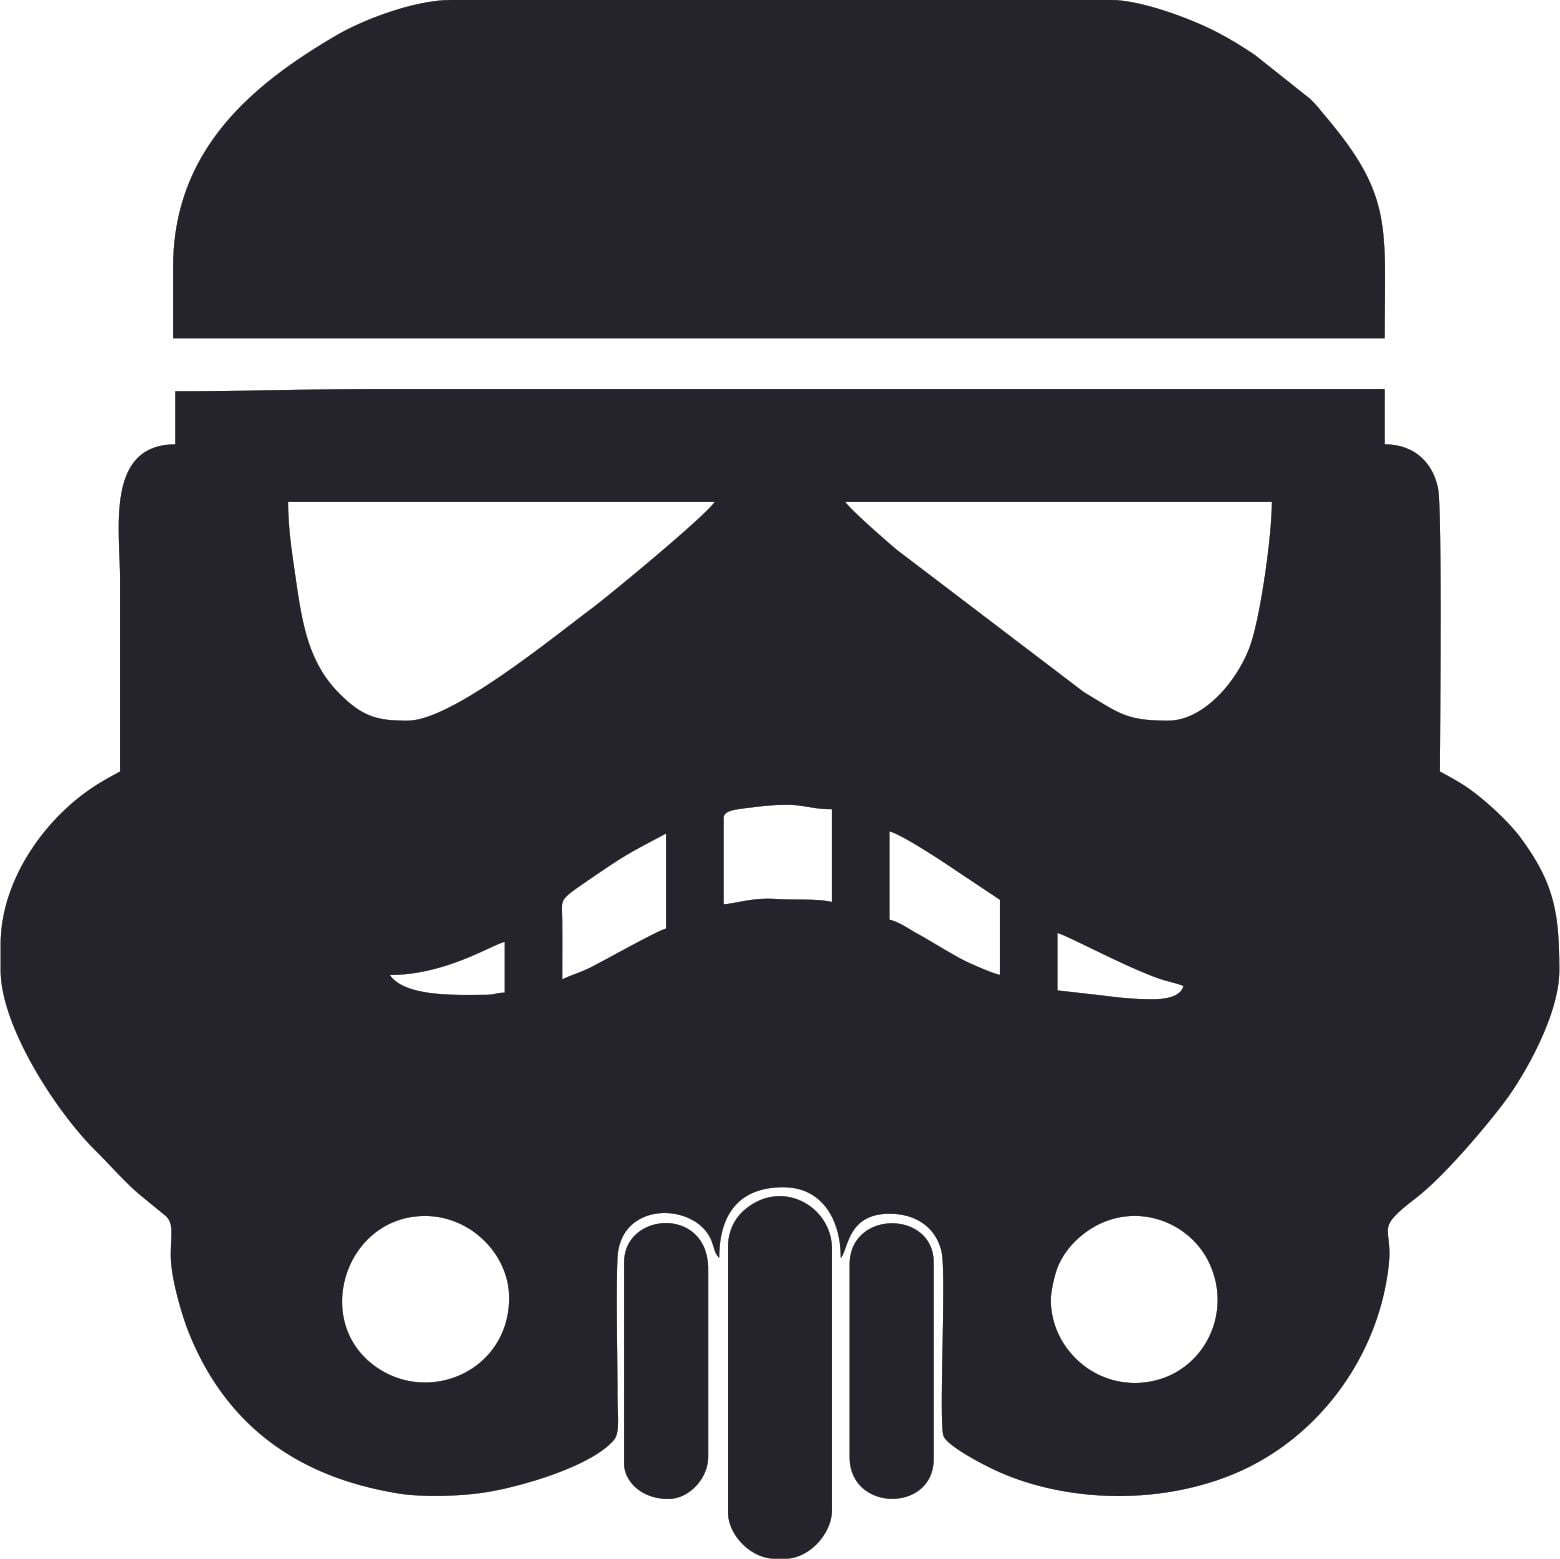 Star Wars 8pc STORMTROOPERS HELMET WALL DECALS Sticker Storm Trooper Decor 